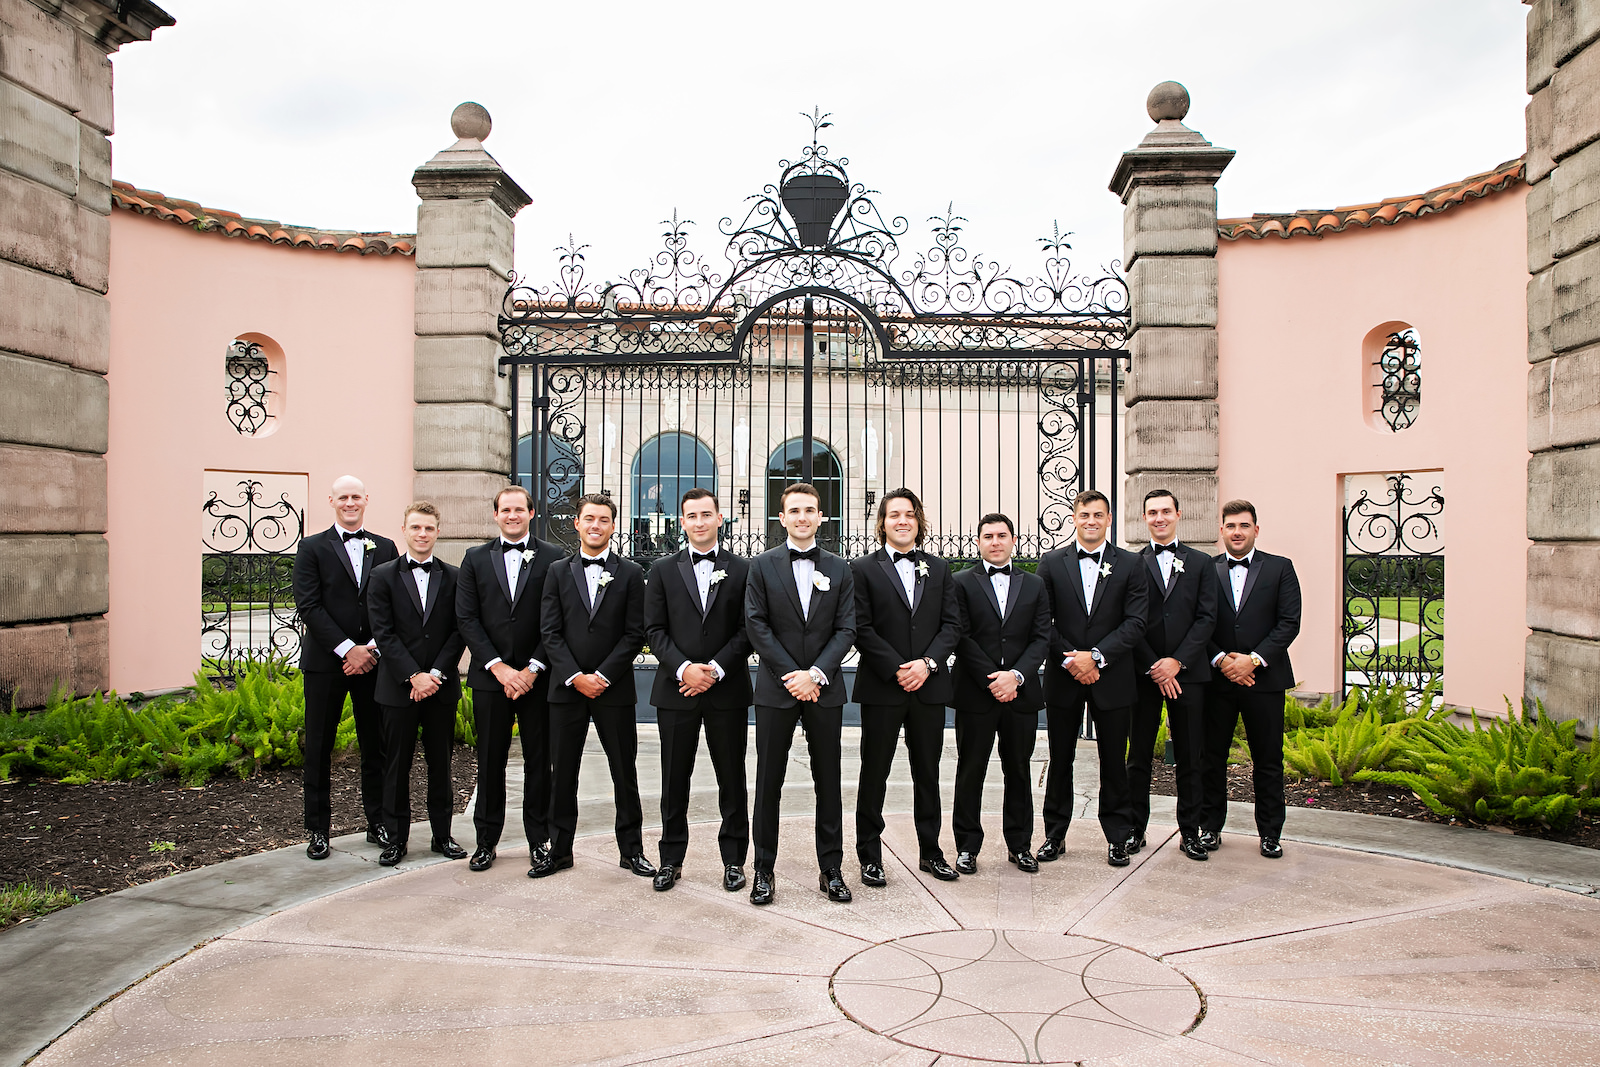 Luxurious Modern Wedding, Groom and Groomsmen in Black Tuxedos | Tampa Bay Wedding Photographer Limelight Photography | Sarasota Wedding Venue Ringling Museum